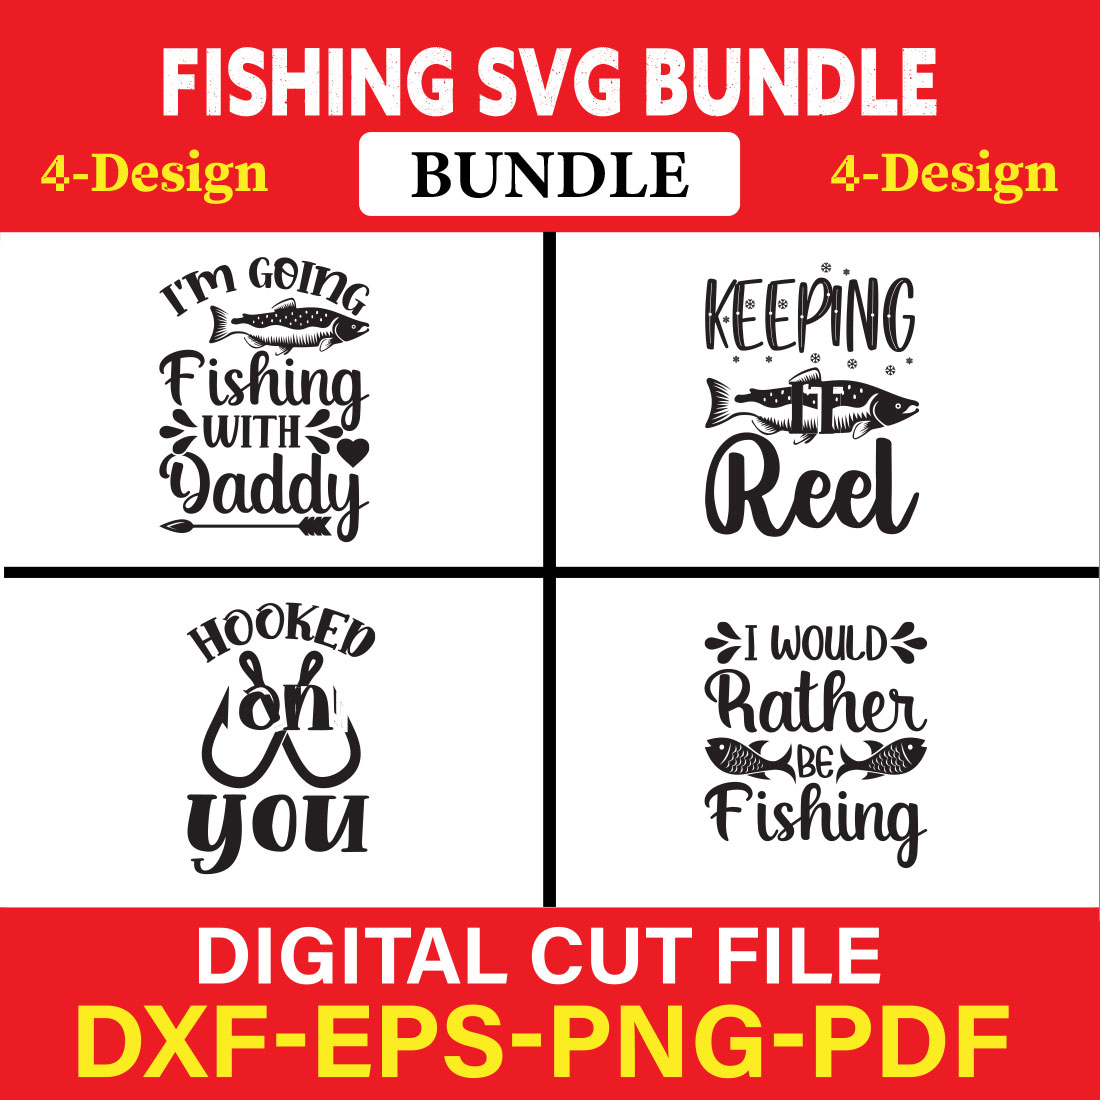 Fishing T-shirt Design Bundle Vol-13 cover image.